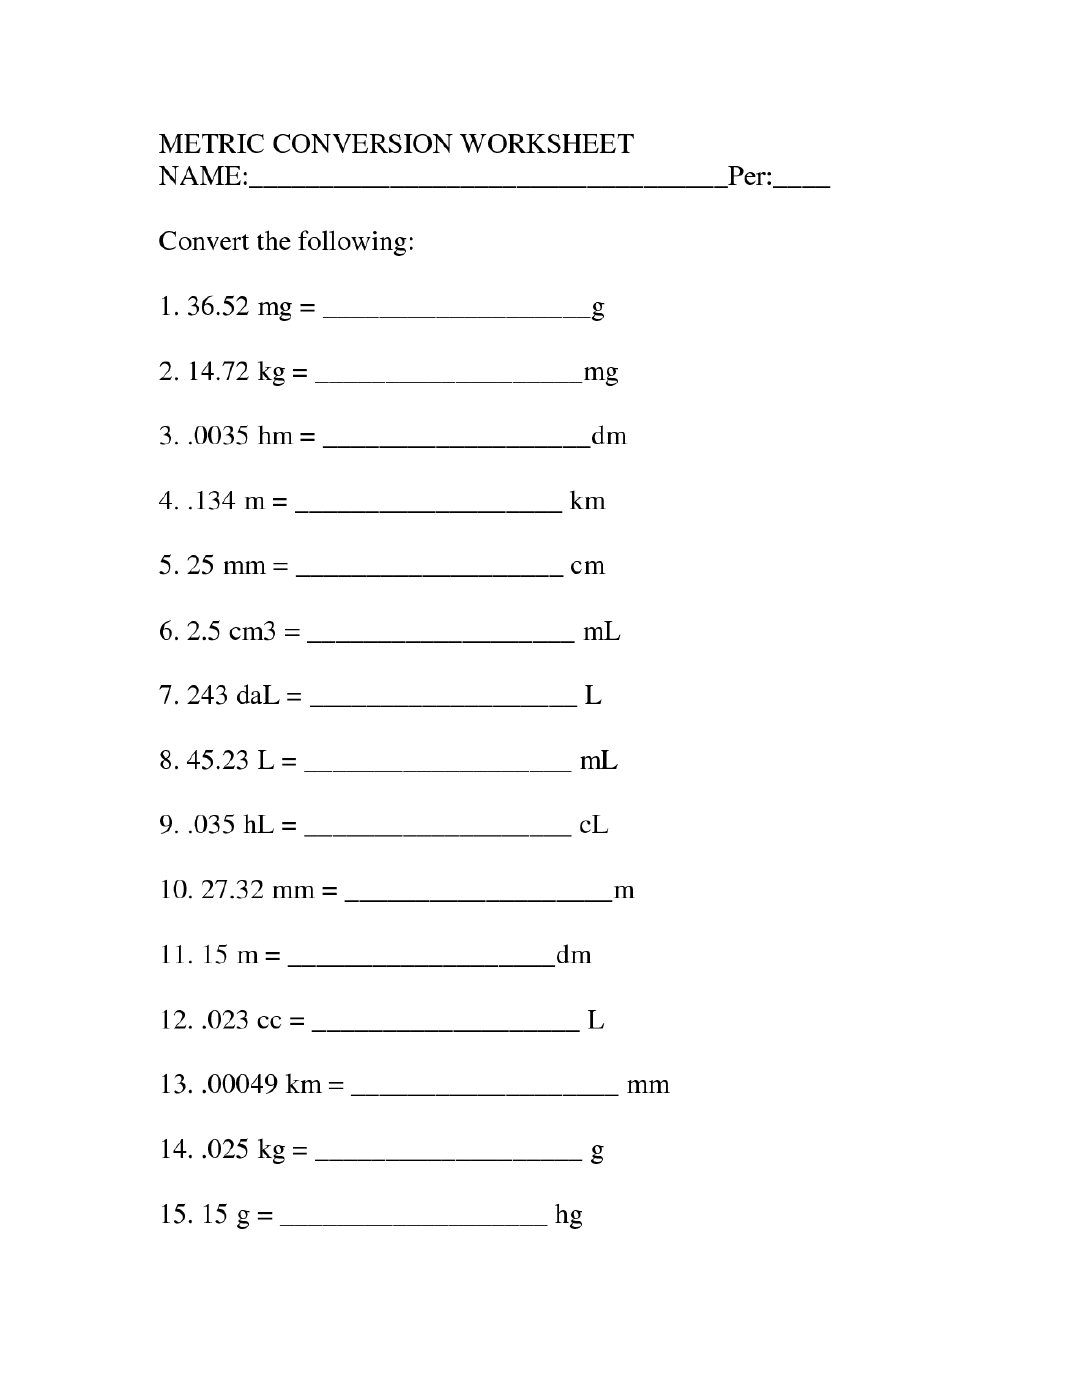 High School Chemistry Worksheets Pdf  School Chemistry Worksheets Within High School Chemistry Worksheets